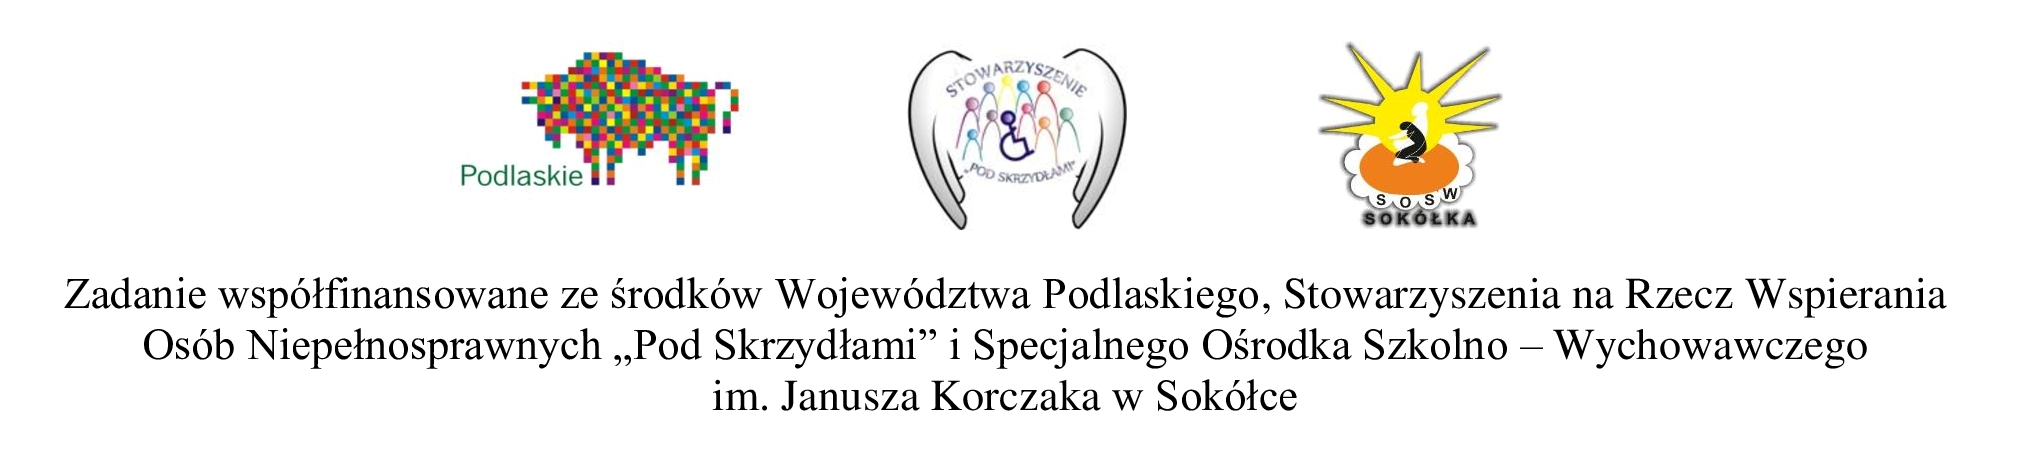 https://www.soswsokolka.pl/images/logotyp_wsmc.jpg